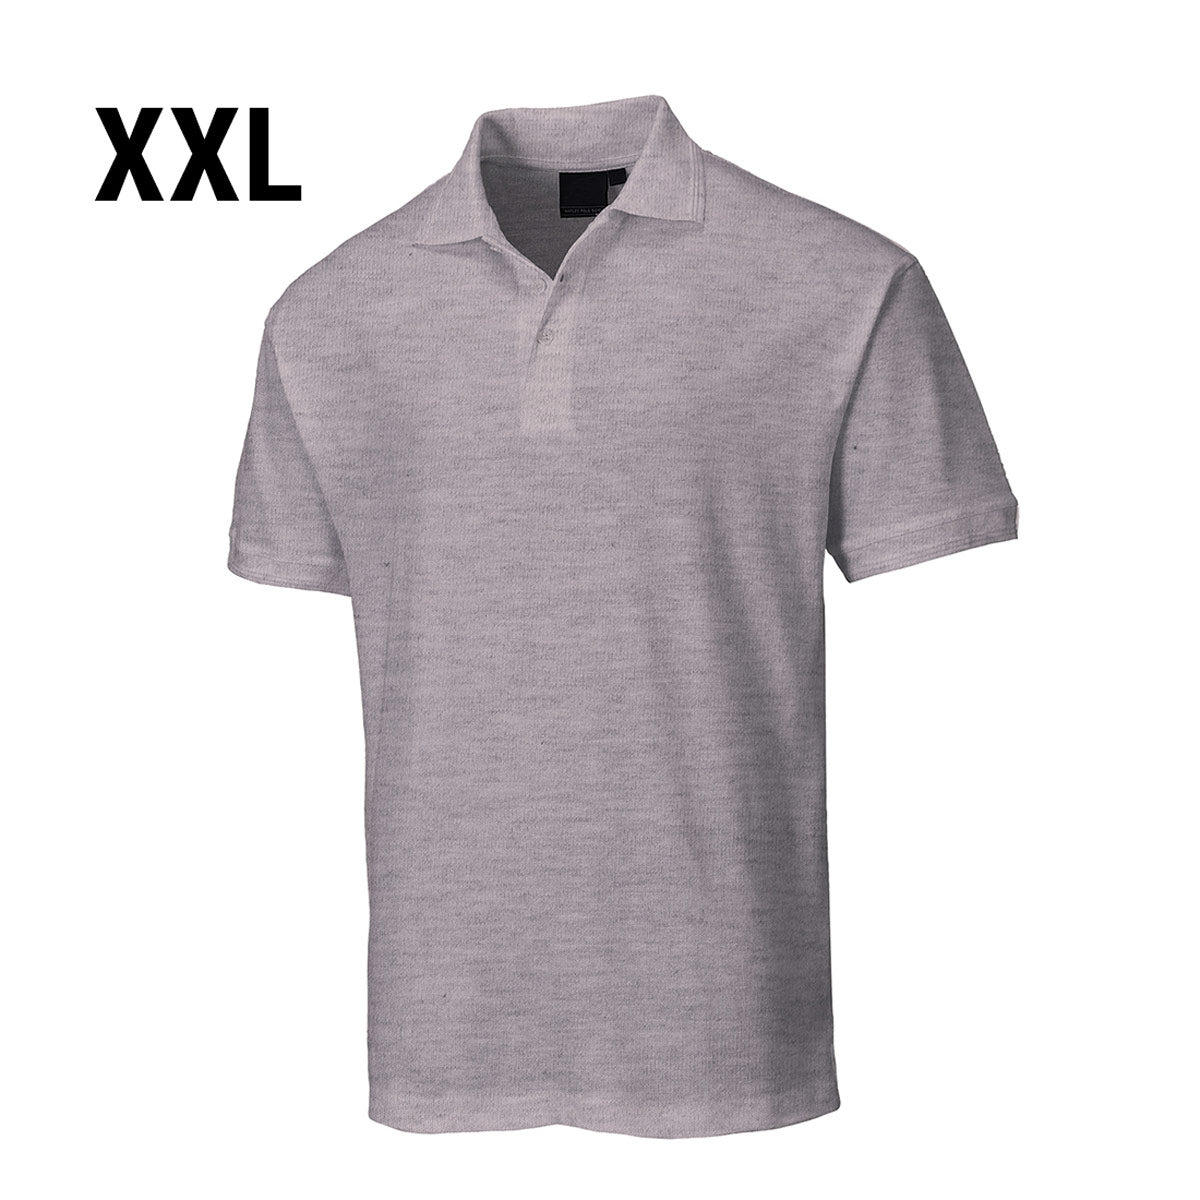 Polo shirt til mænd - Grå - Størrelse: XXL